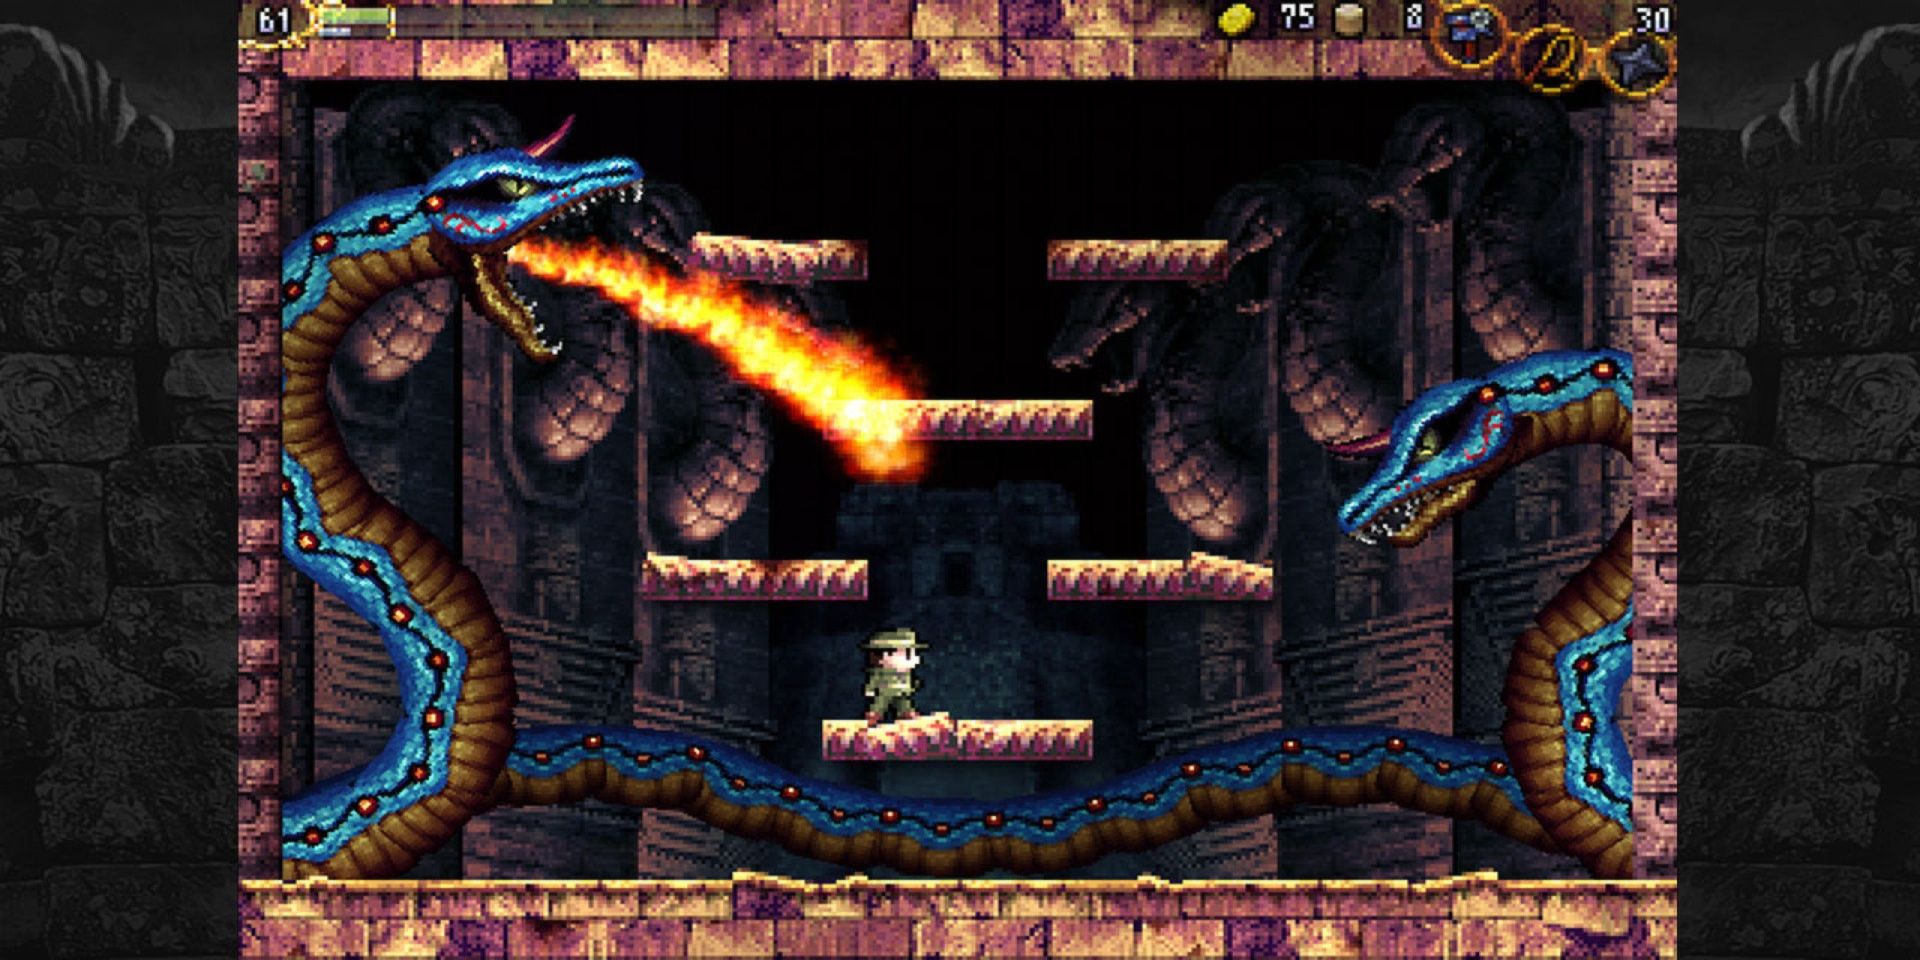 A screenshot of the platform video game La-Mulana.